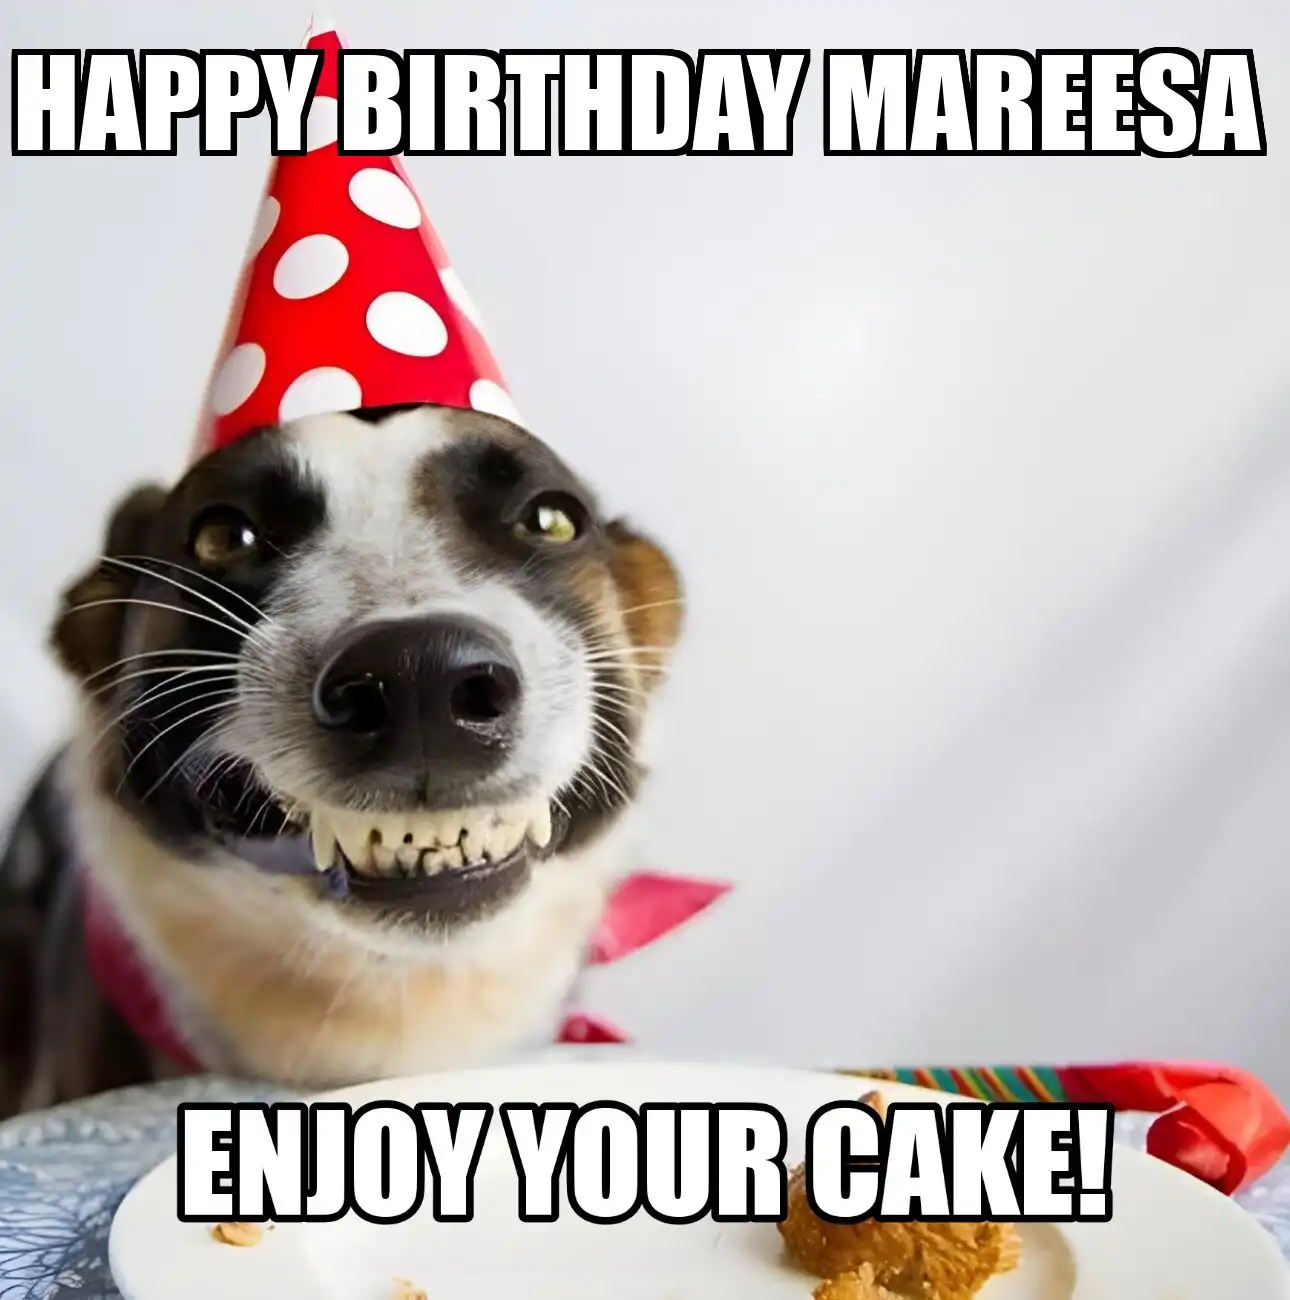 Happy Birthday Mareesa Enjoy Your Cake Dog Meme